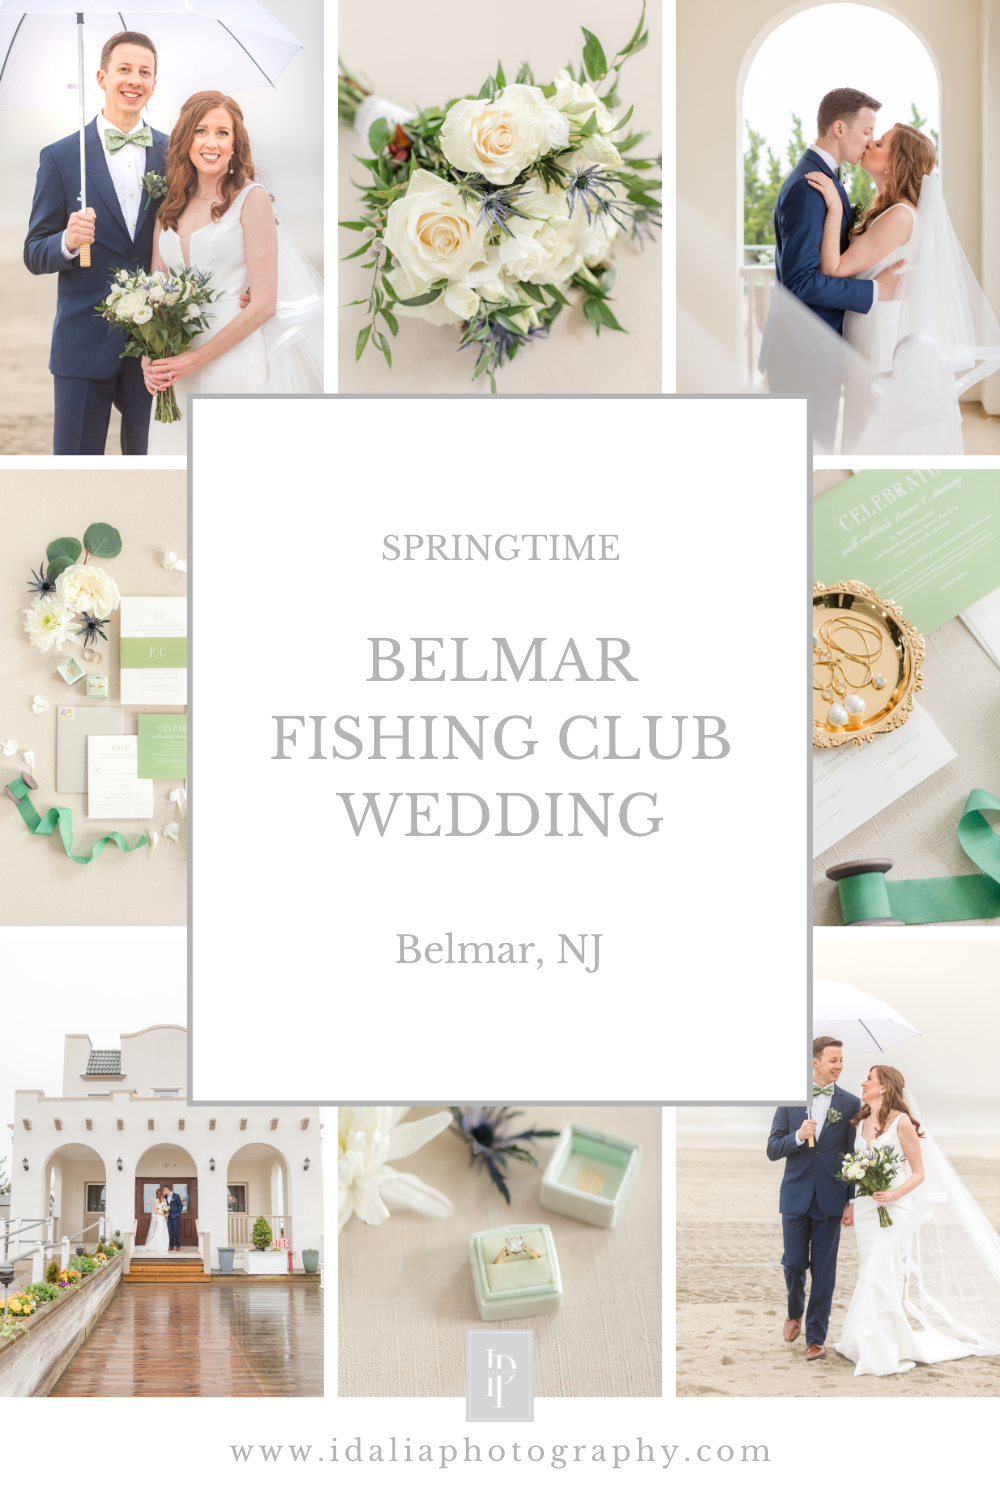 Belmar Fishing Club wedding day with foggy beach portraits in Belmar, NJ photographed by New Jersey wedding photographer Idalia Photography